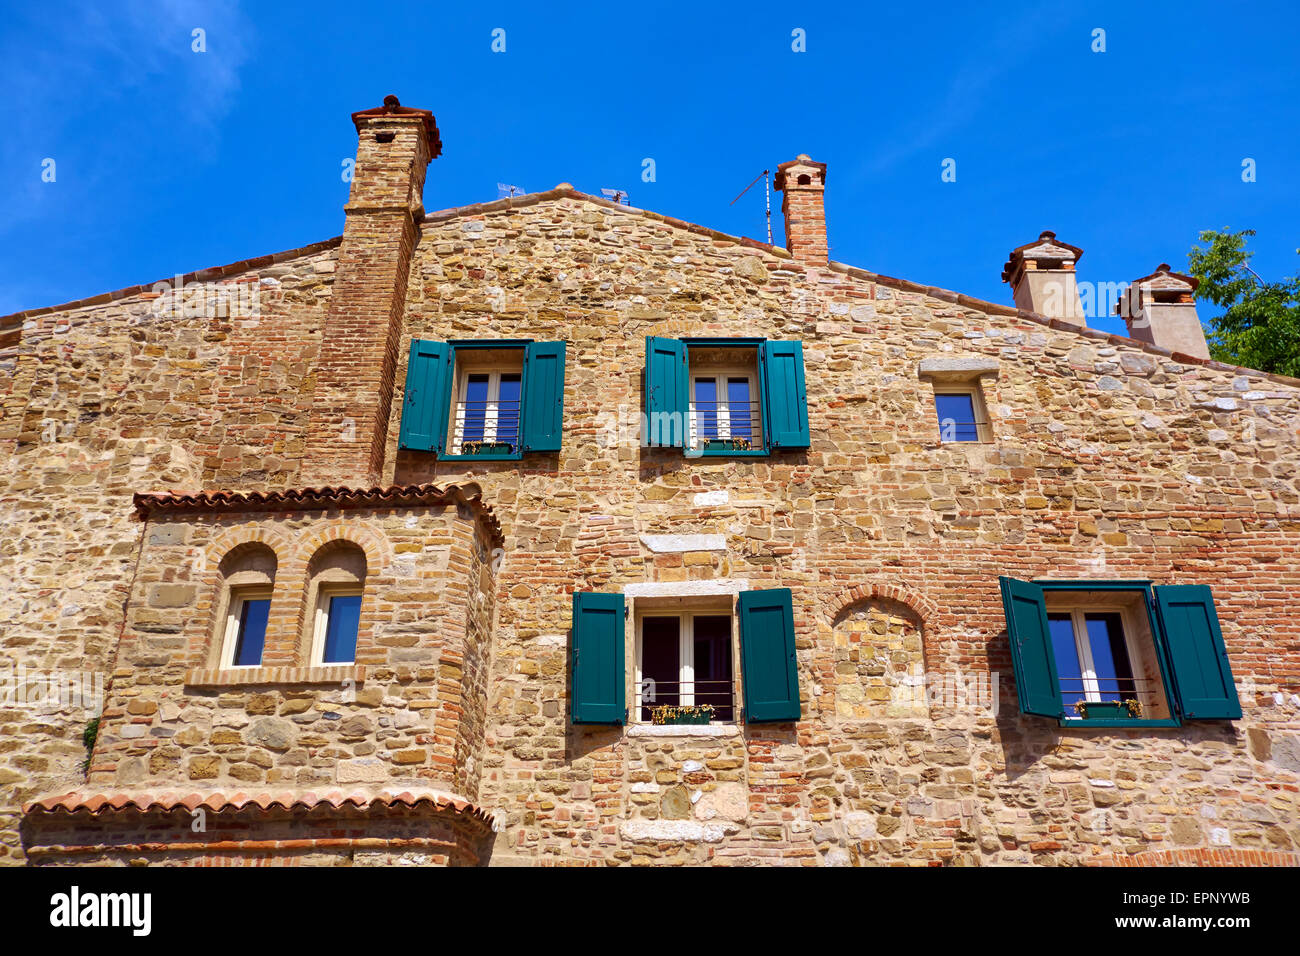 Old House Facade With Windows and Chimneys in Grado, Friuli - Venezia Giulia, Italy, Adriatic Sea. Stock Photo